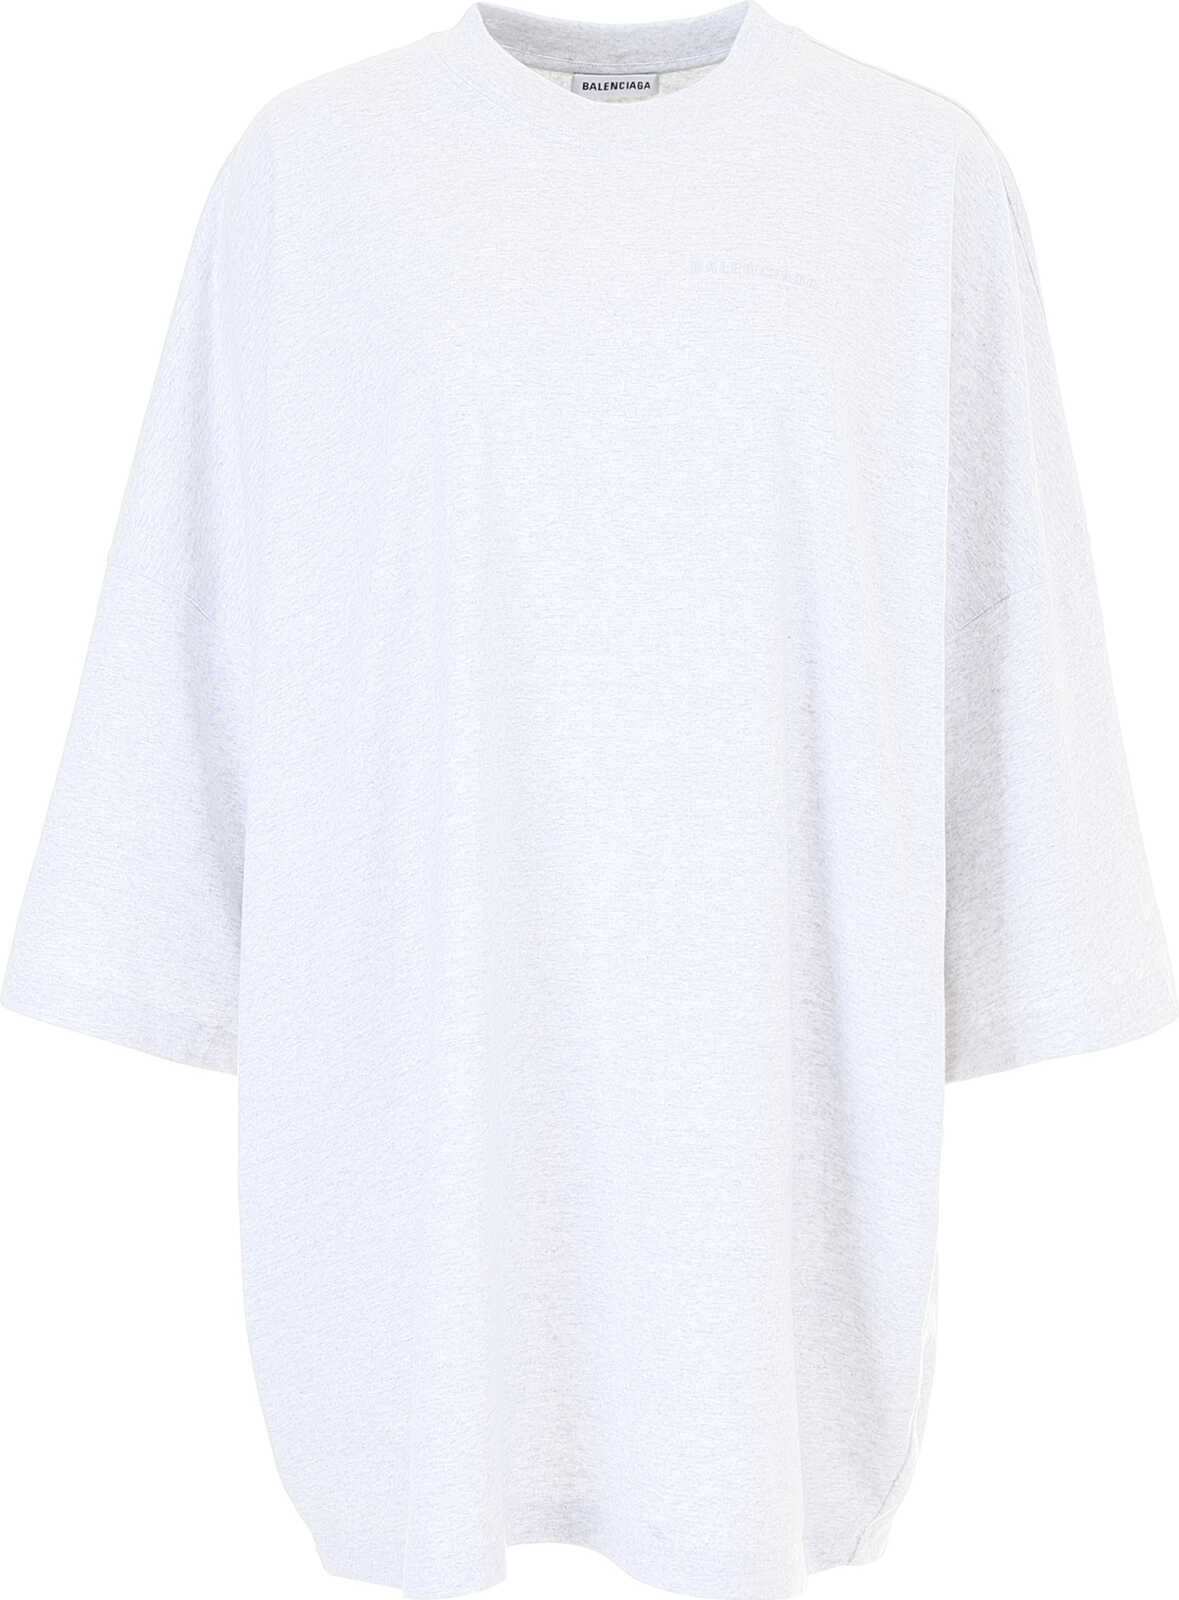 Balenciaga Oversized Idea T-Shirt PALE HEATHER GREY